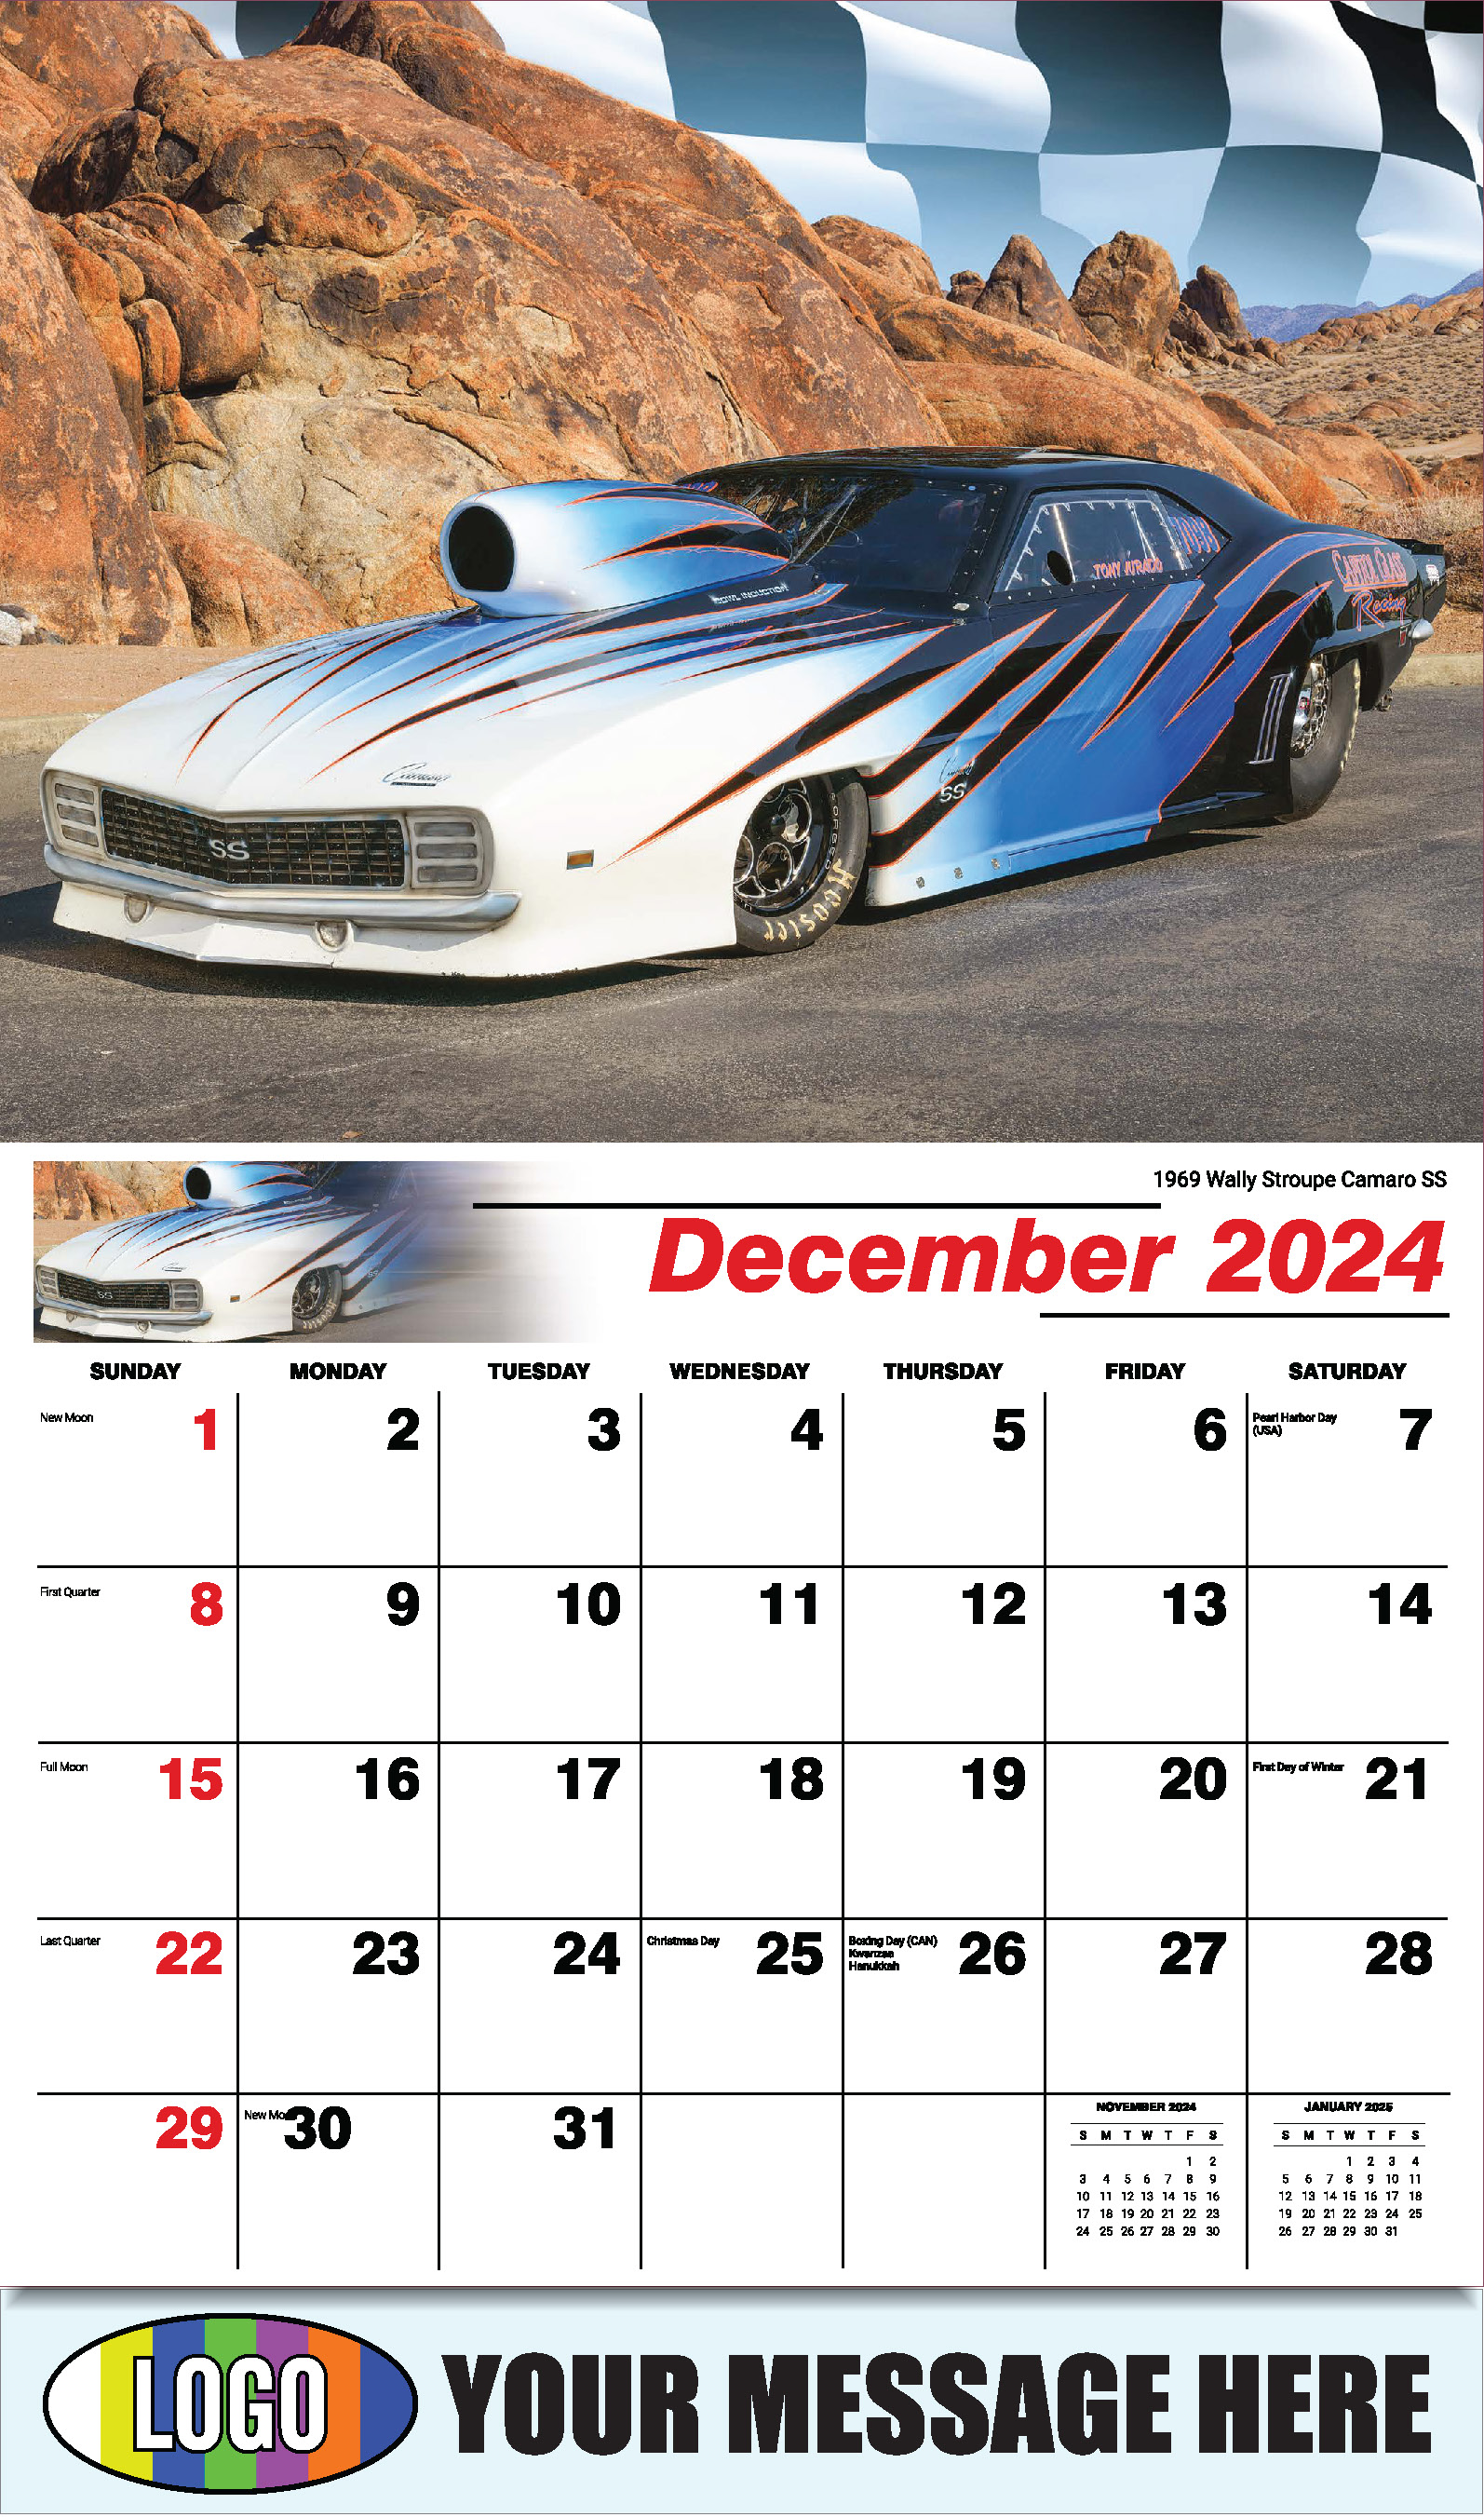 Road Warriors 2025 Automotive Business Promo Wall Calendar - December_a